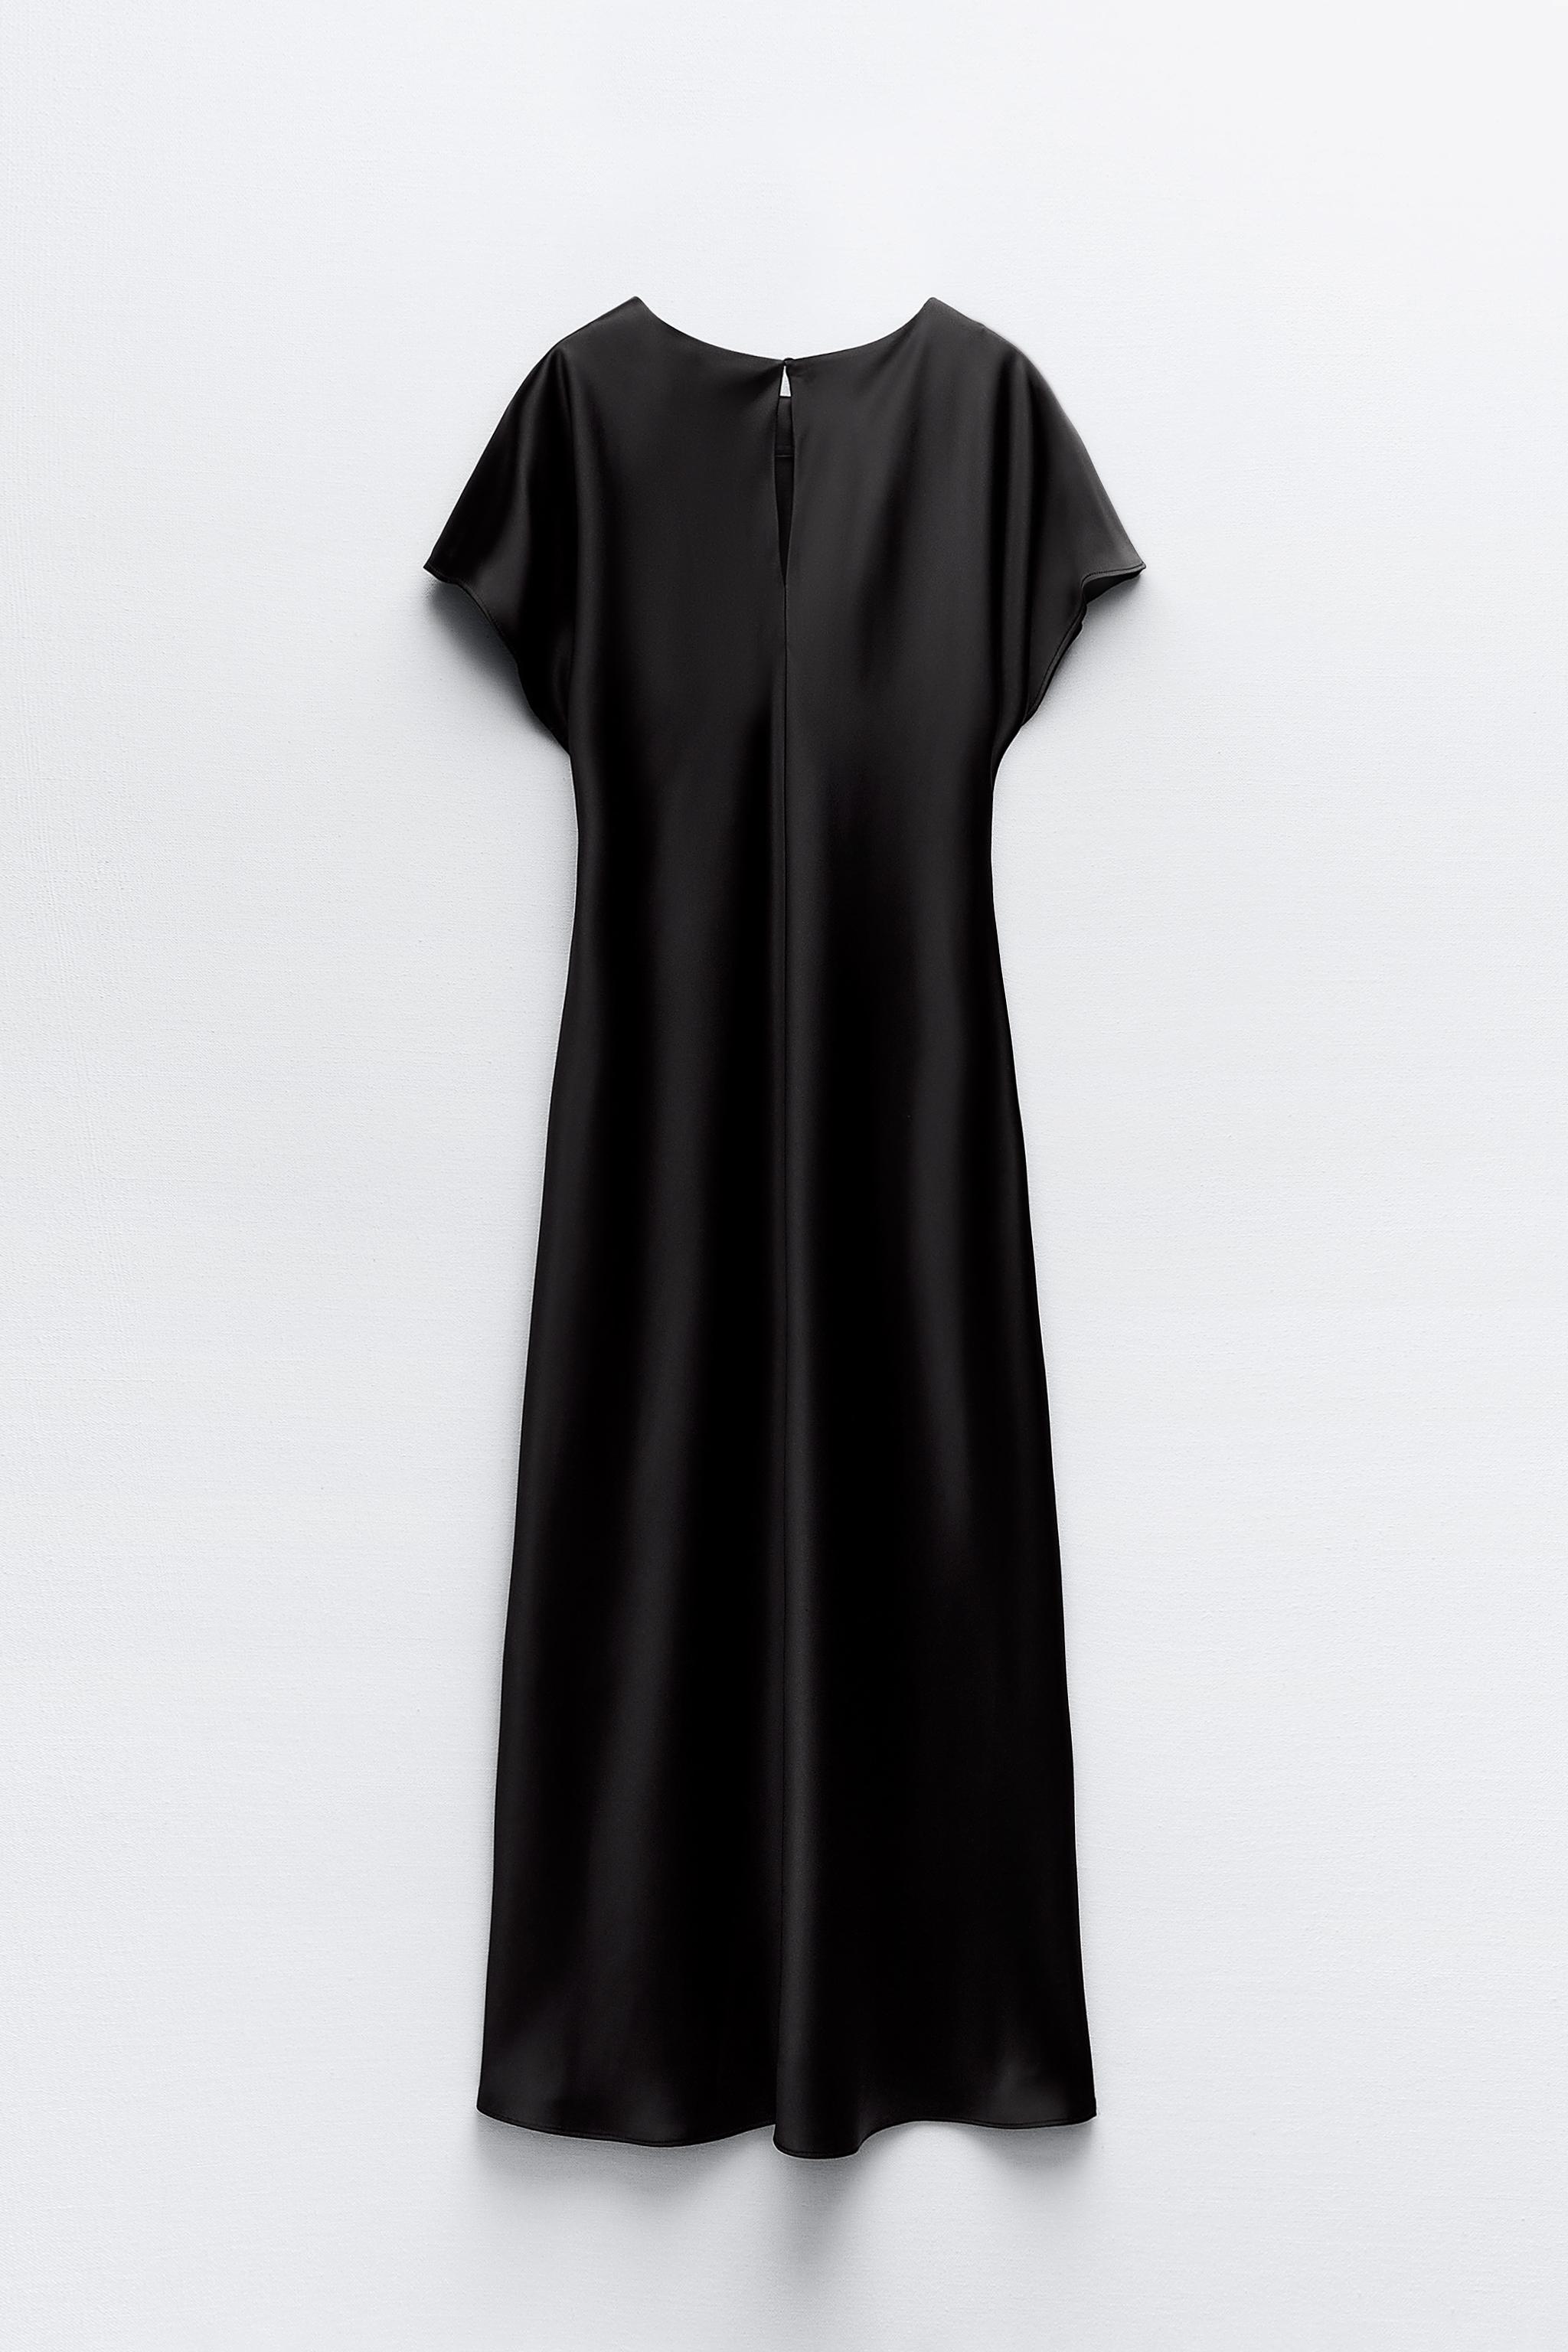 Zara LONG SATIN DRESS - 02731046-V2020